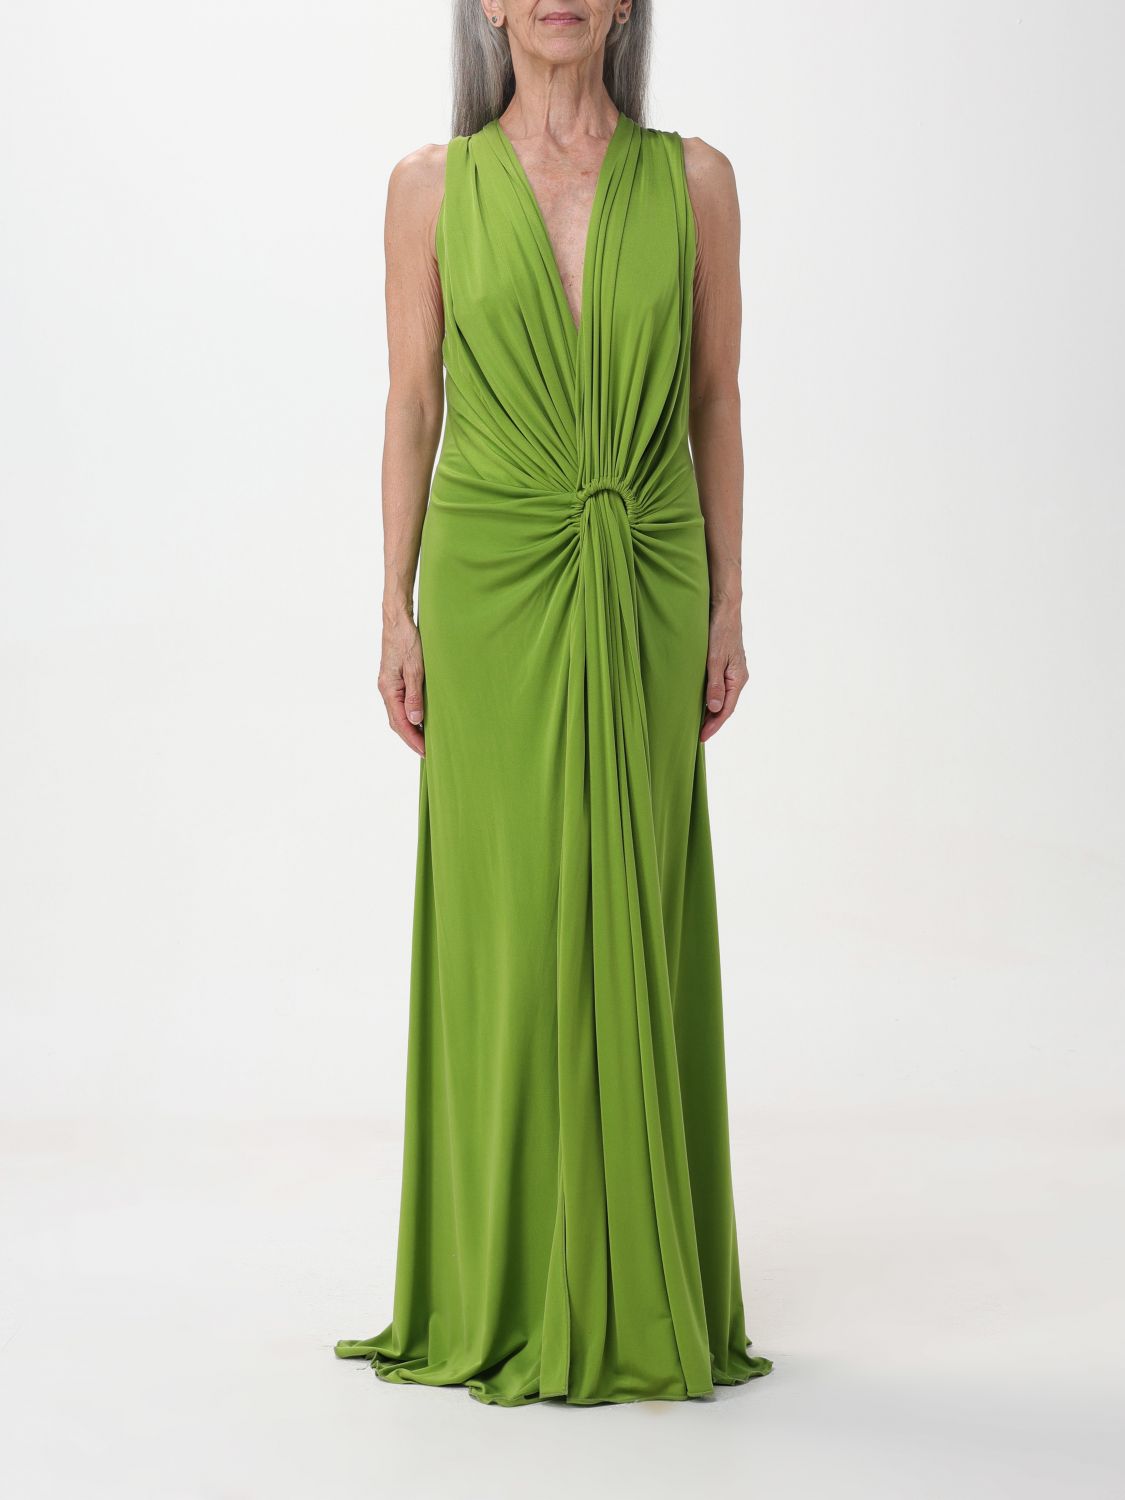 Erika Cavallini Dress  Woman Colour Green